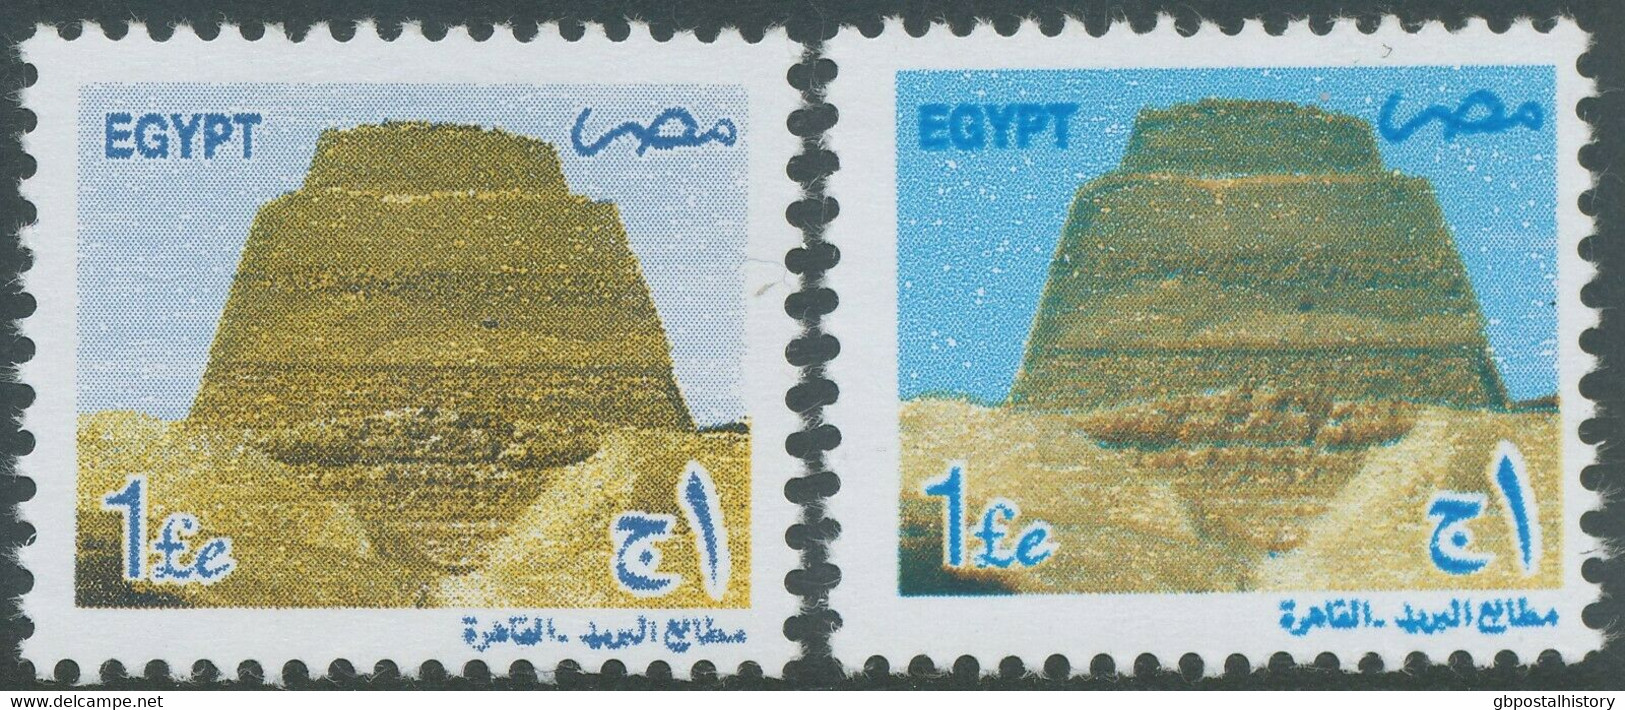 EGYPT 2002/5 Pyramid Of Snofru 1 Egyptian Pound, Two Superb U/M Stamps, VARIETY - Ungebraucht